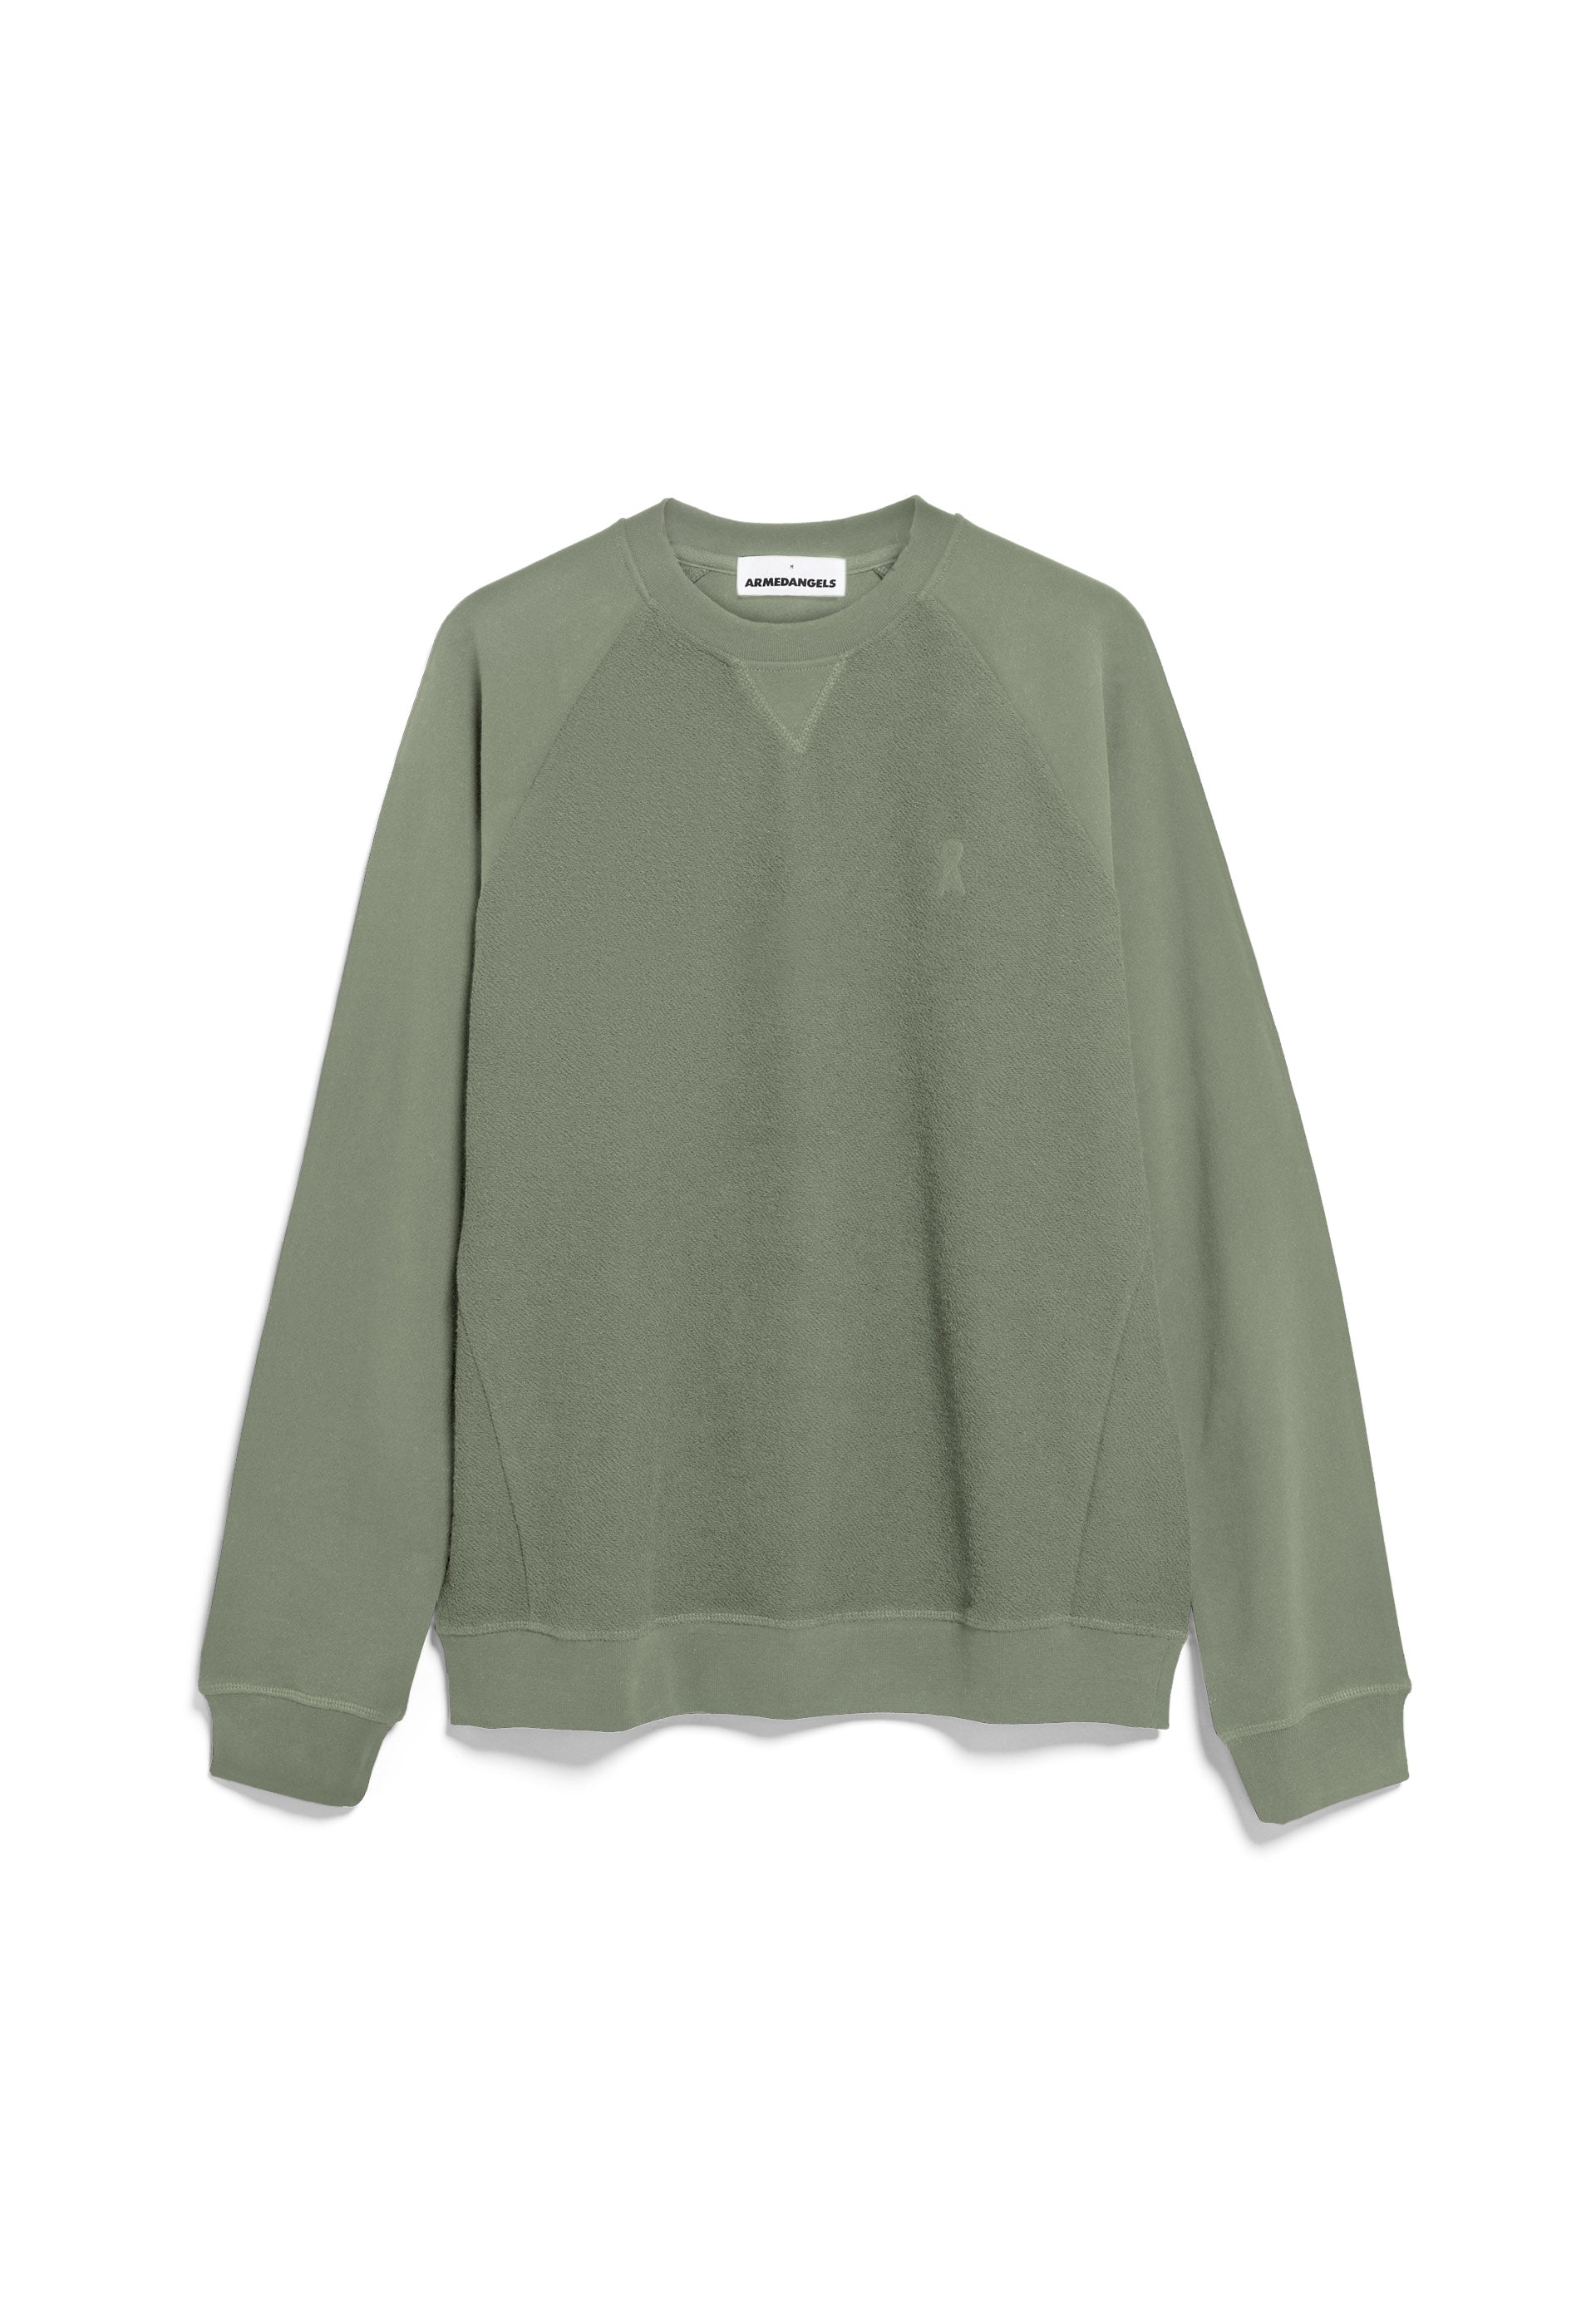 pullover nikolaar grey green